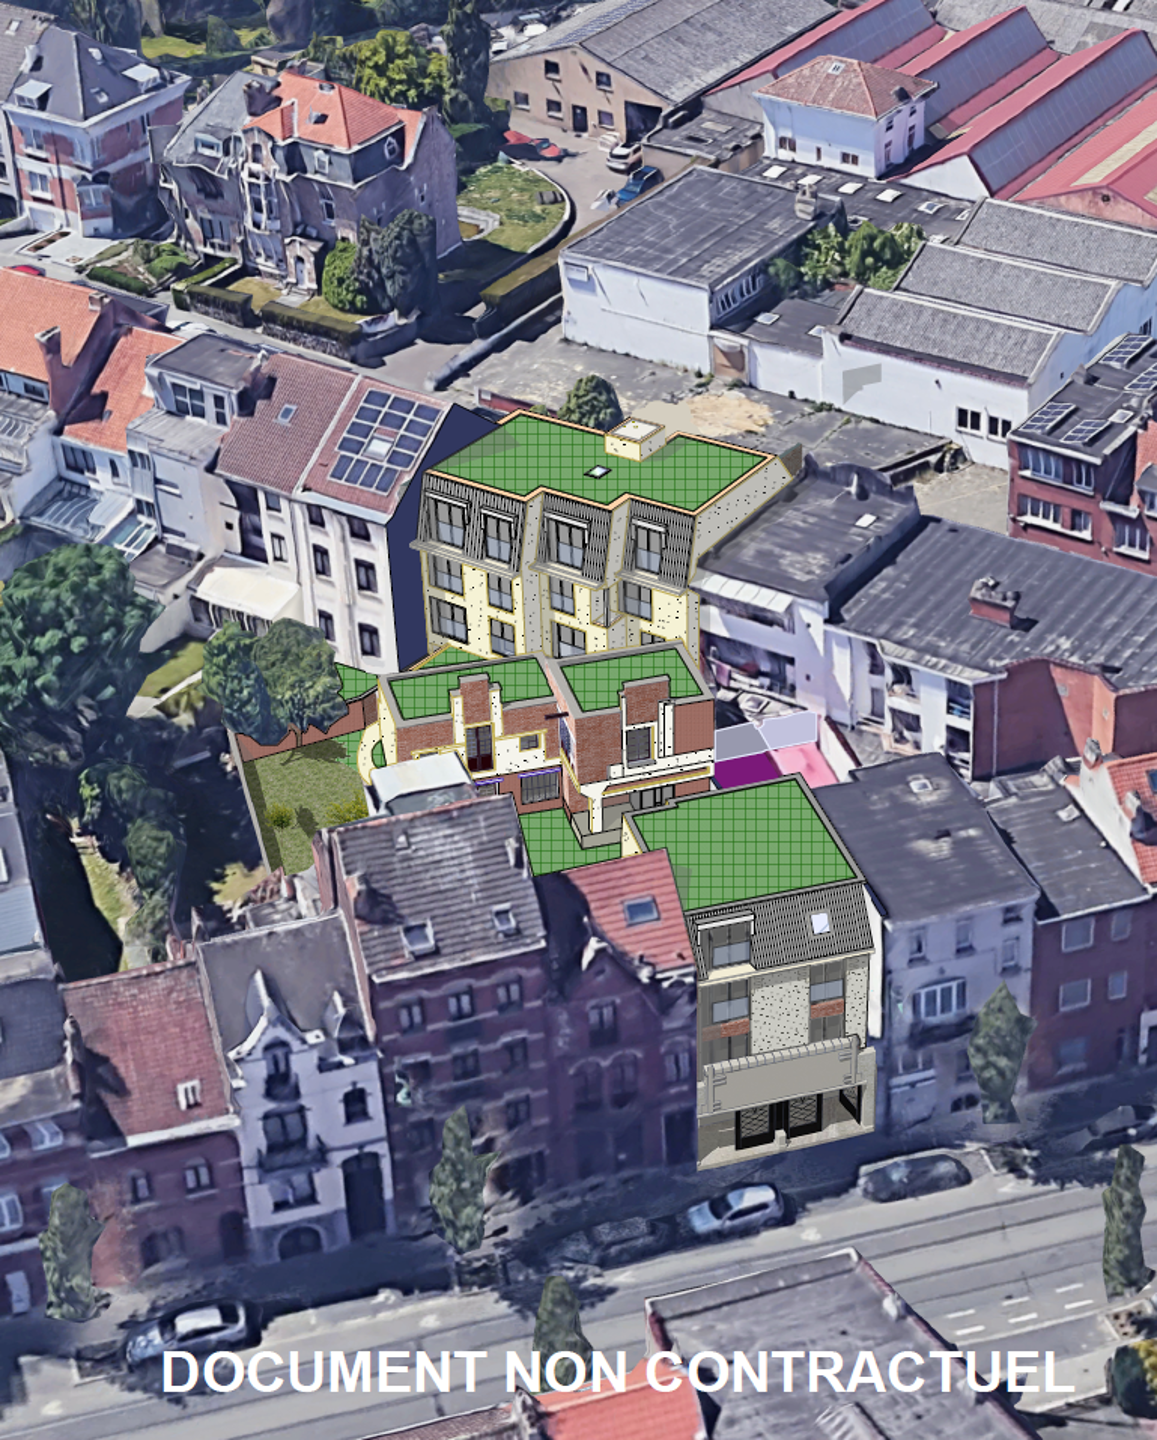 Huis te  koop in Sint-Agatha-Berchem 1082 1150000.00€ 18 slaapkamers m² - Zoekertje 161120